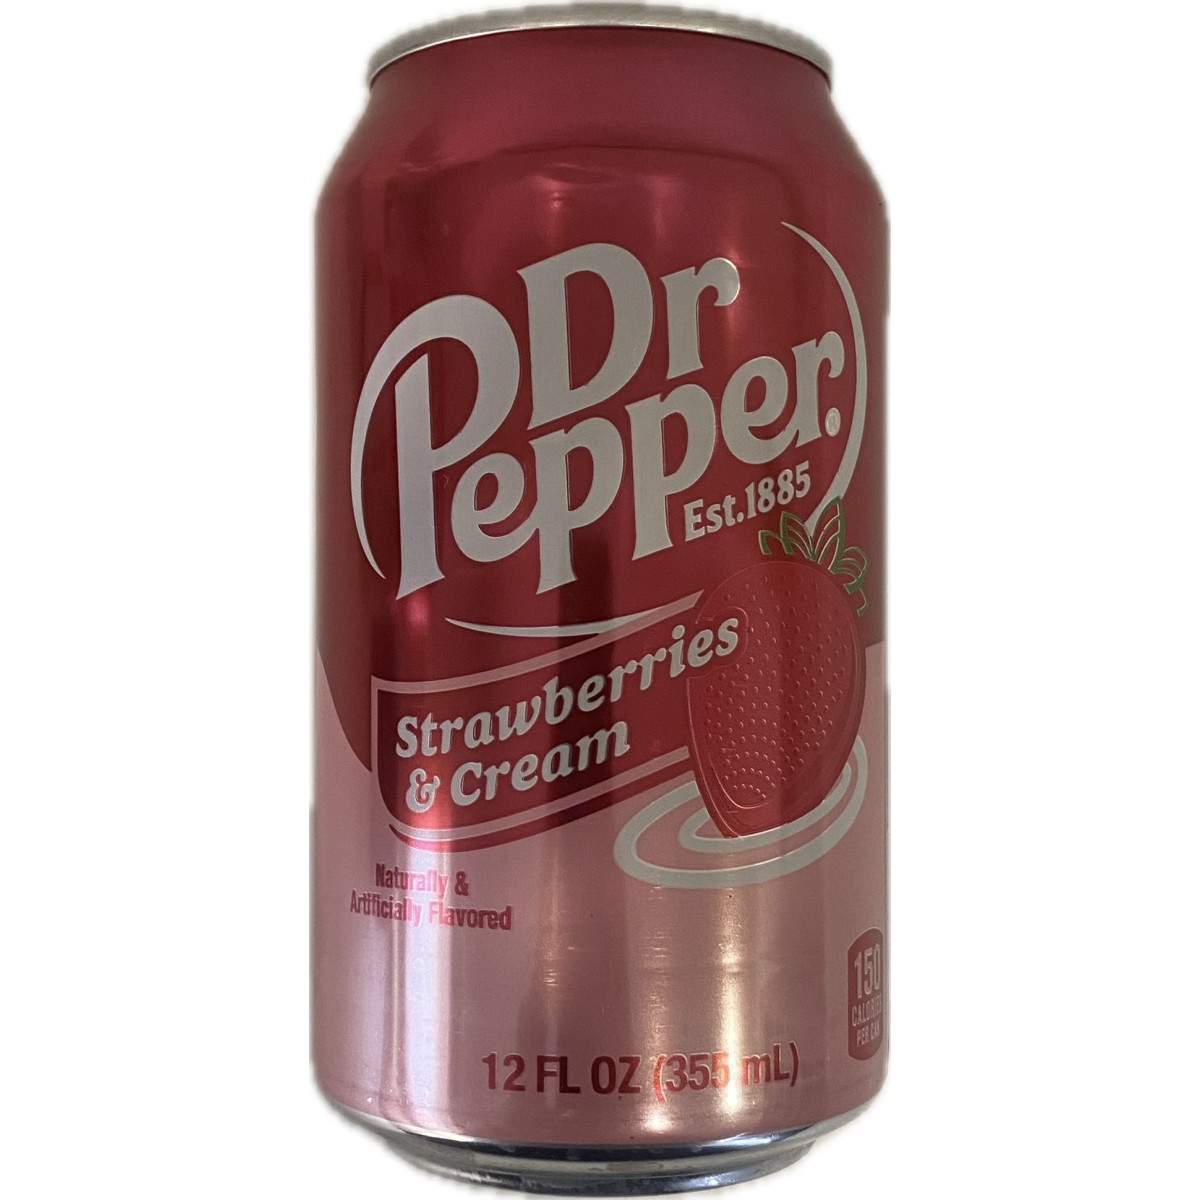 Dr pepper strawberris cream